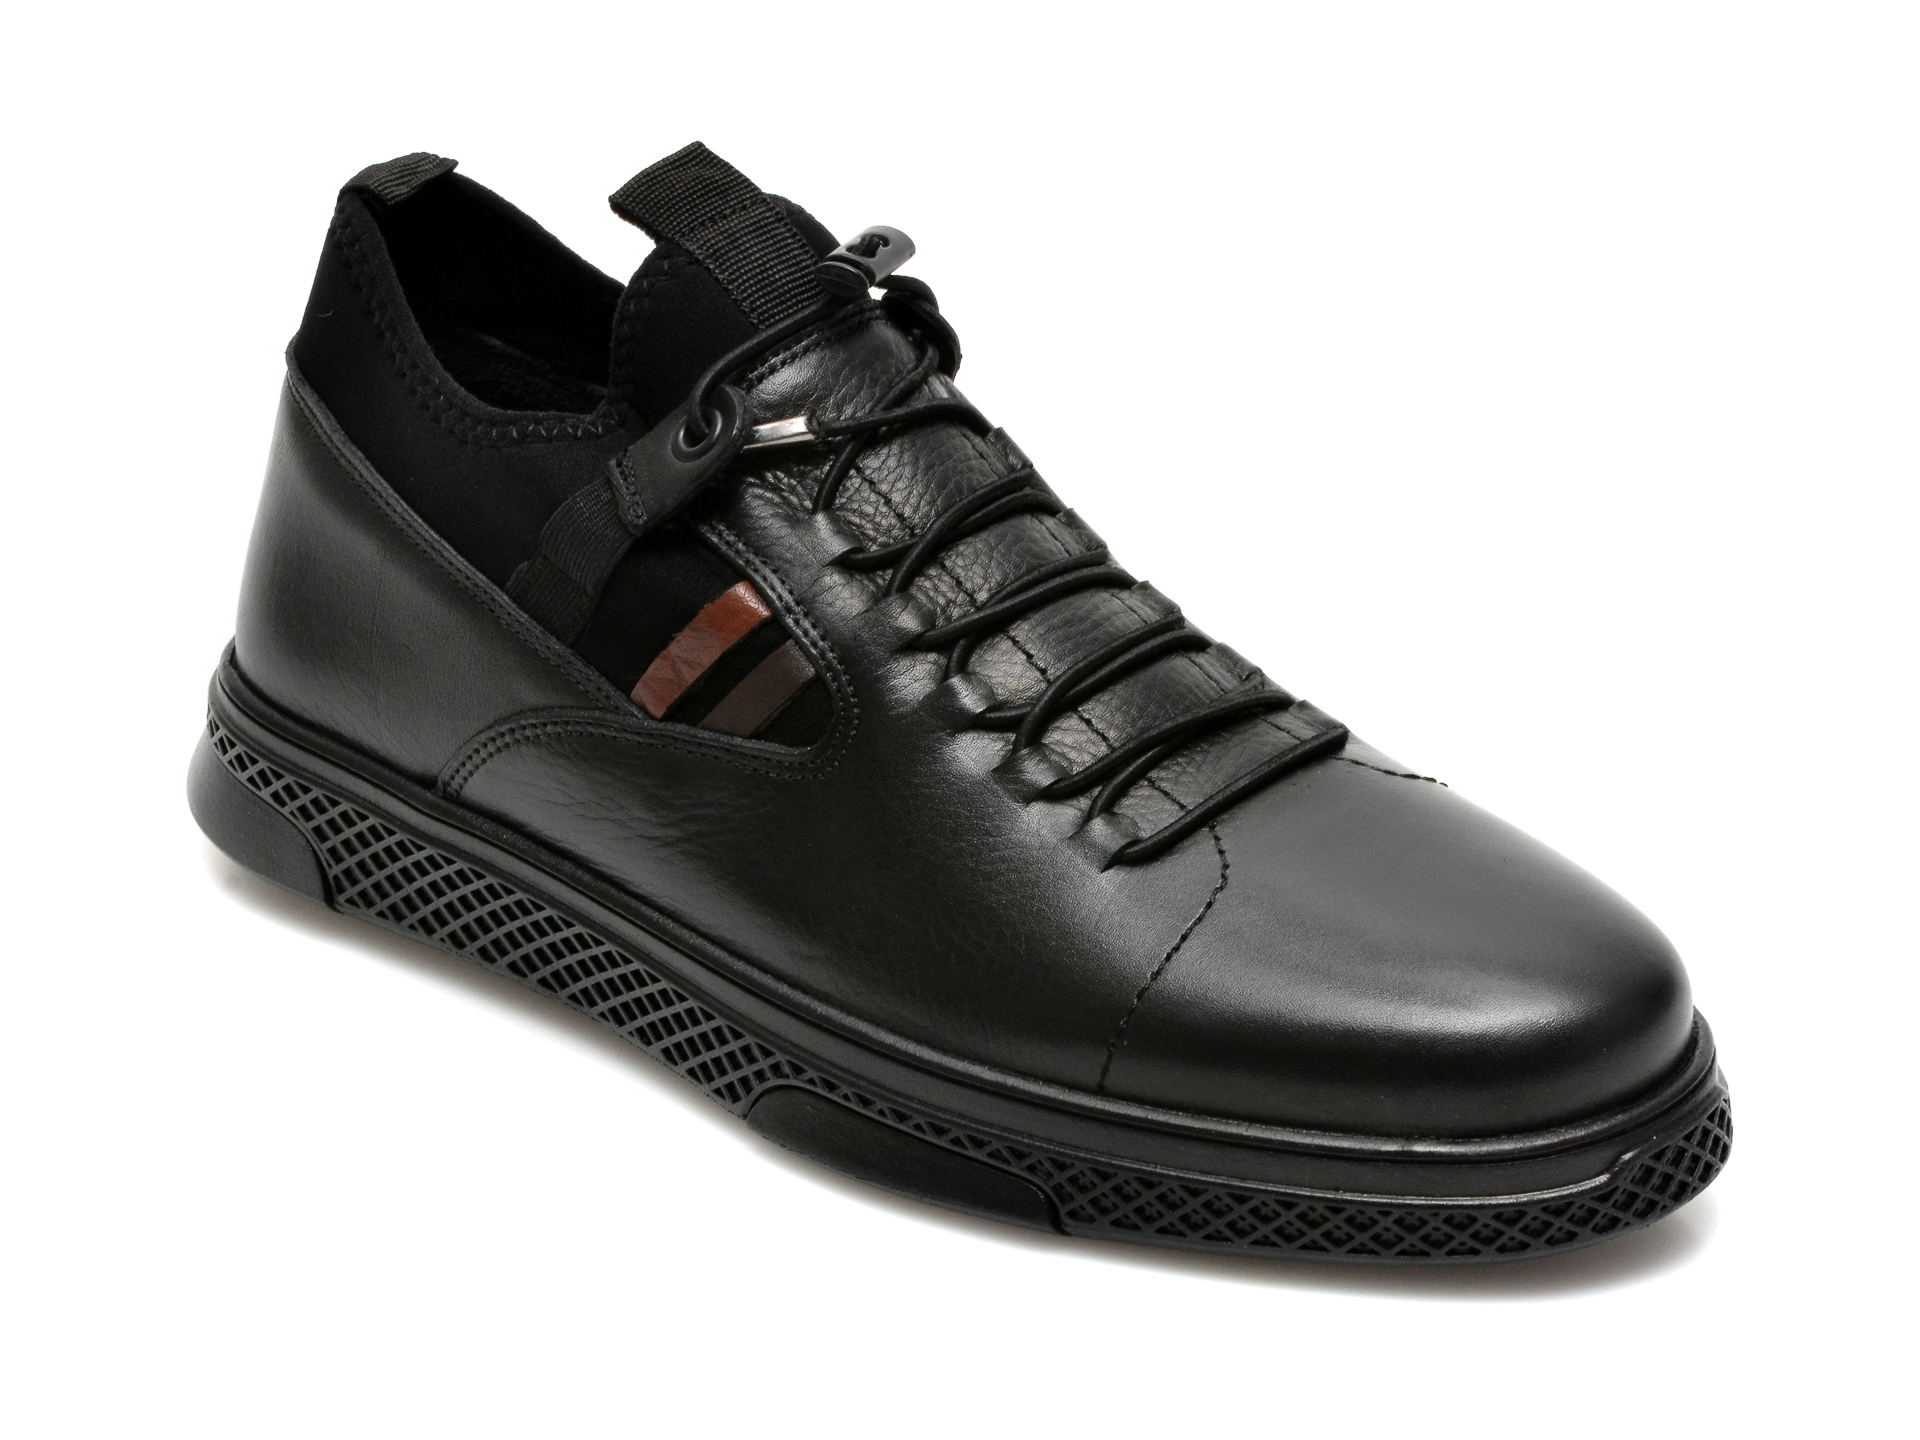 Pantofi OTTER negri, 21RS117, din material textil si piele naturala Otter